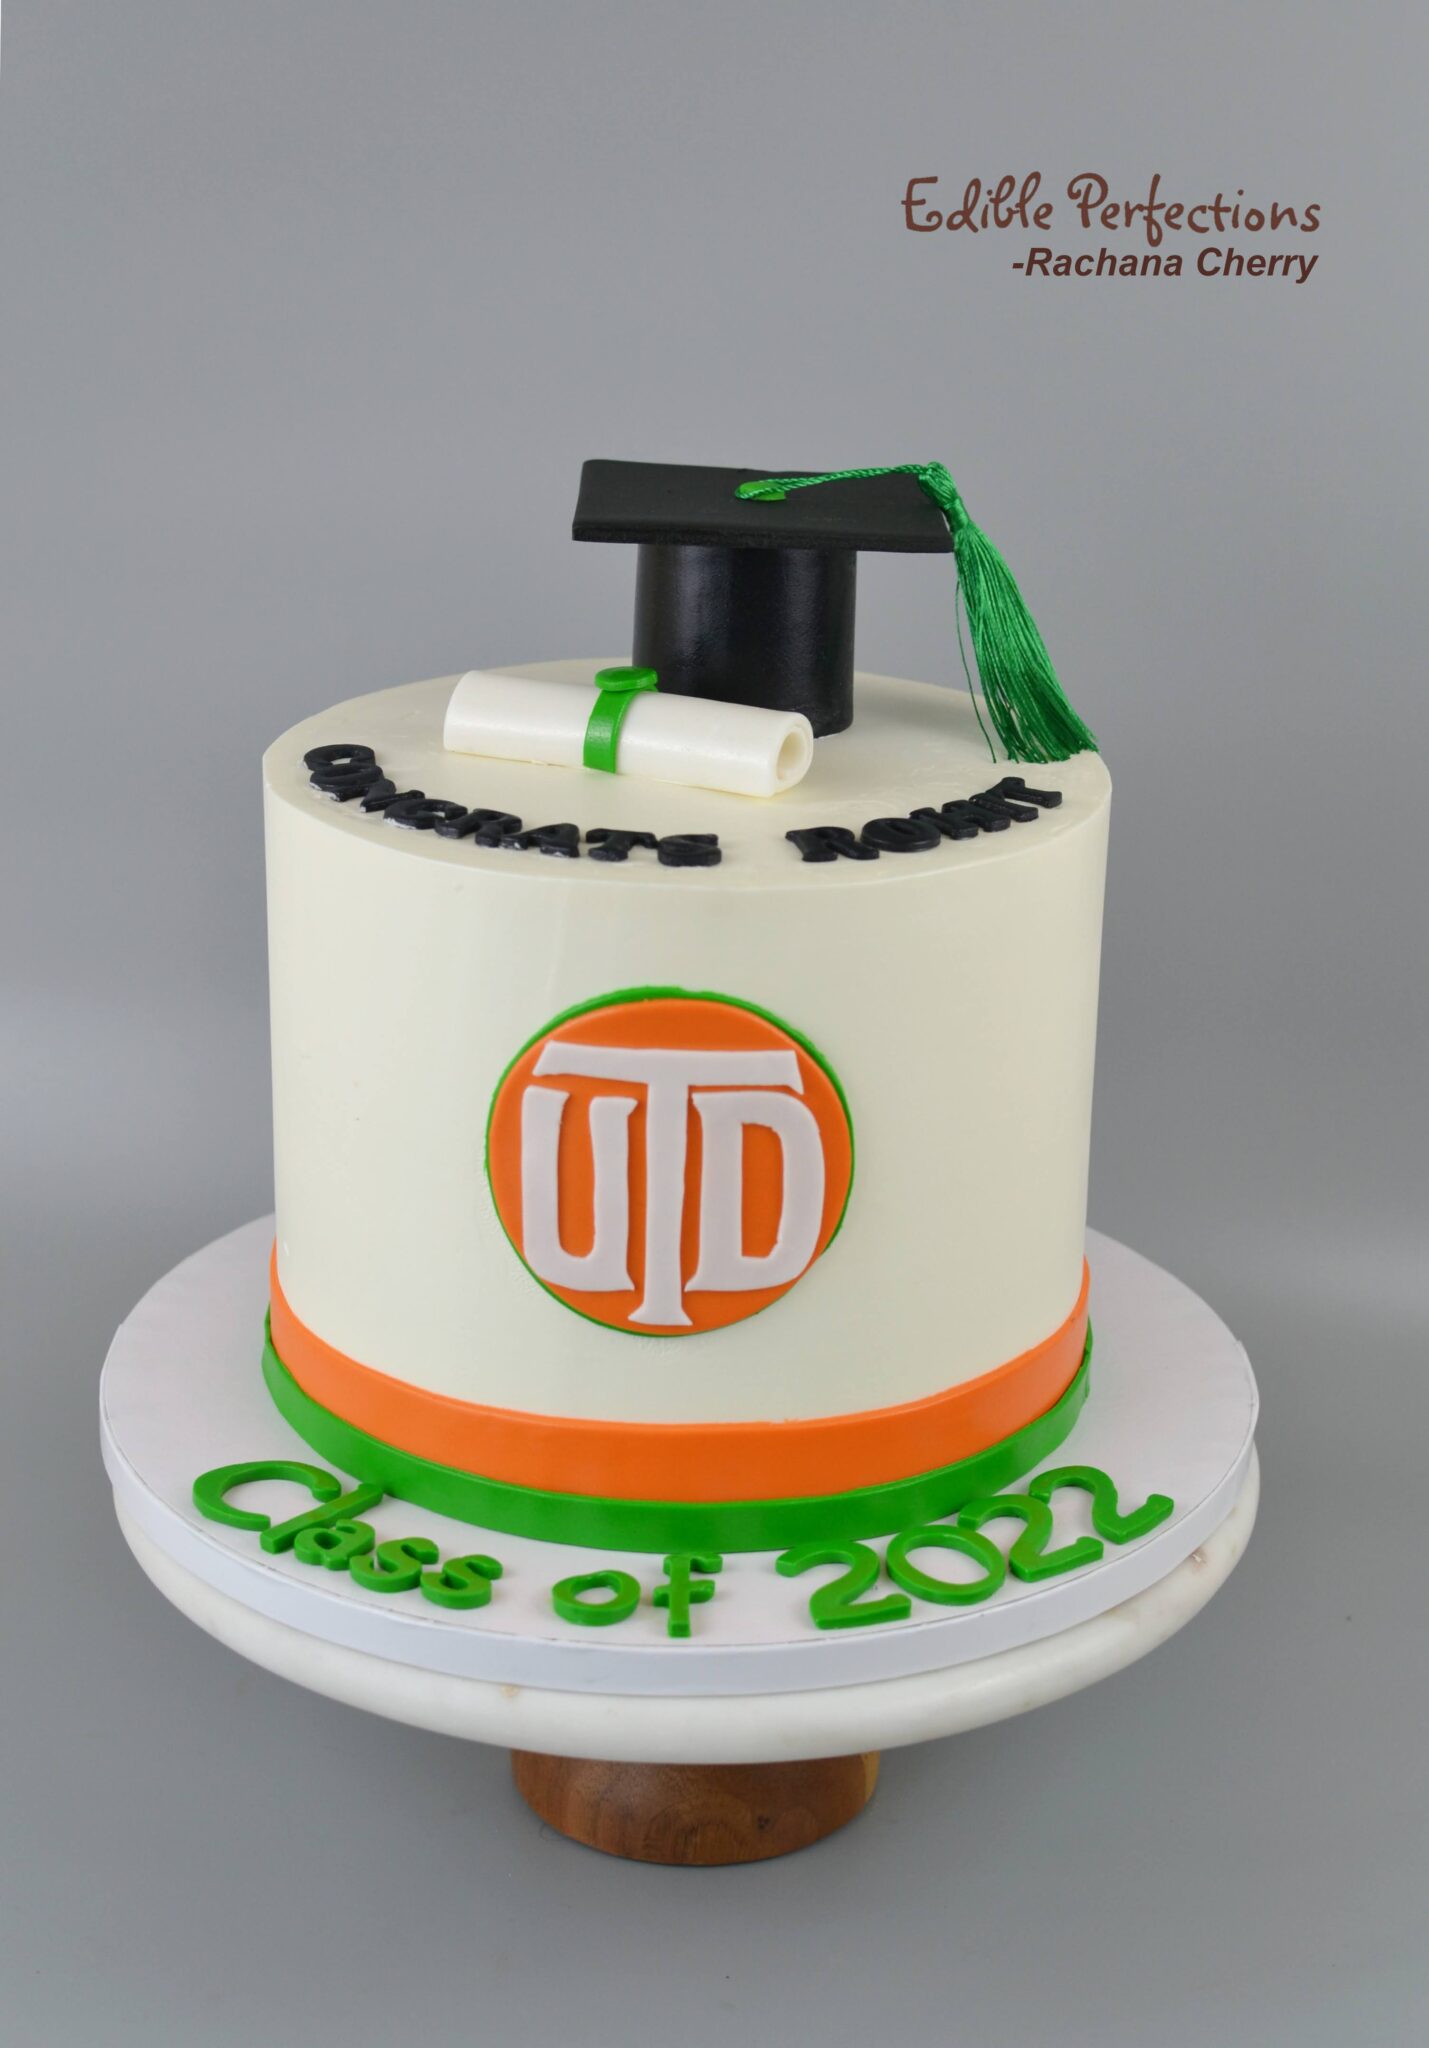 UTD Graduation cake Edible Perfections